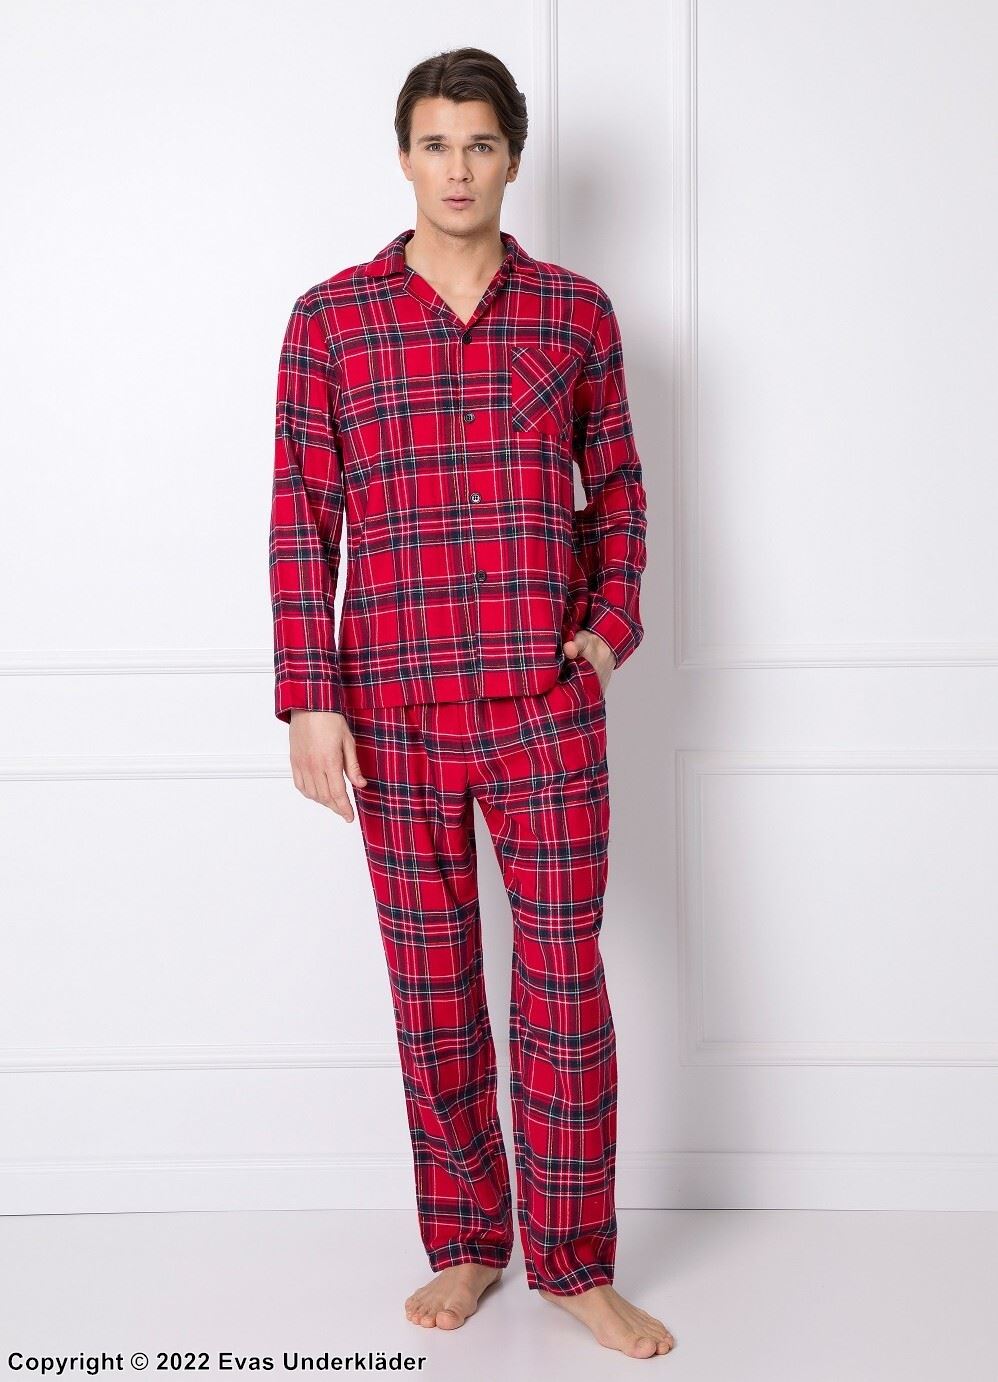 Men's top and pants pajamas, long sleeves, pocket, scott-checkered pattern